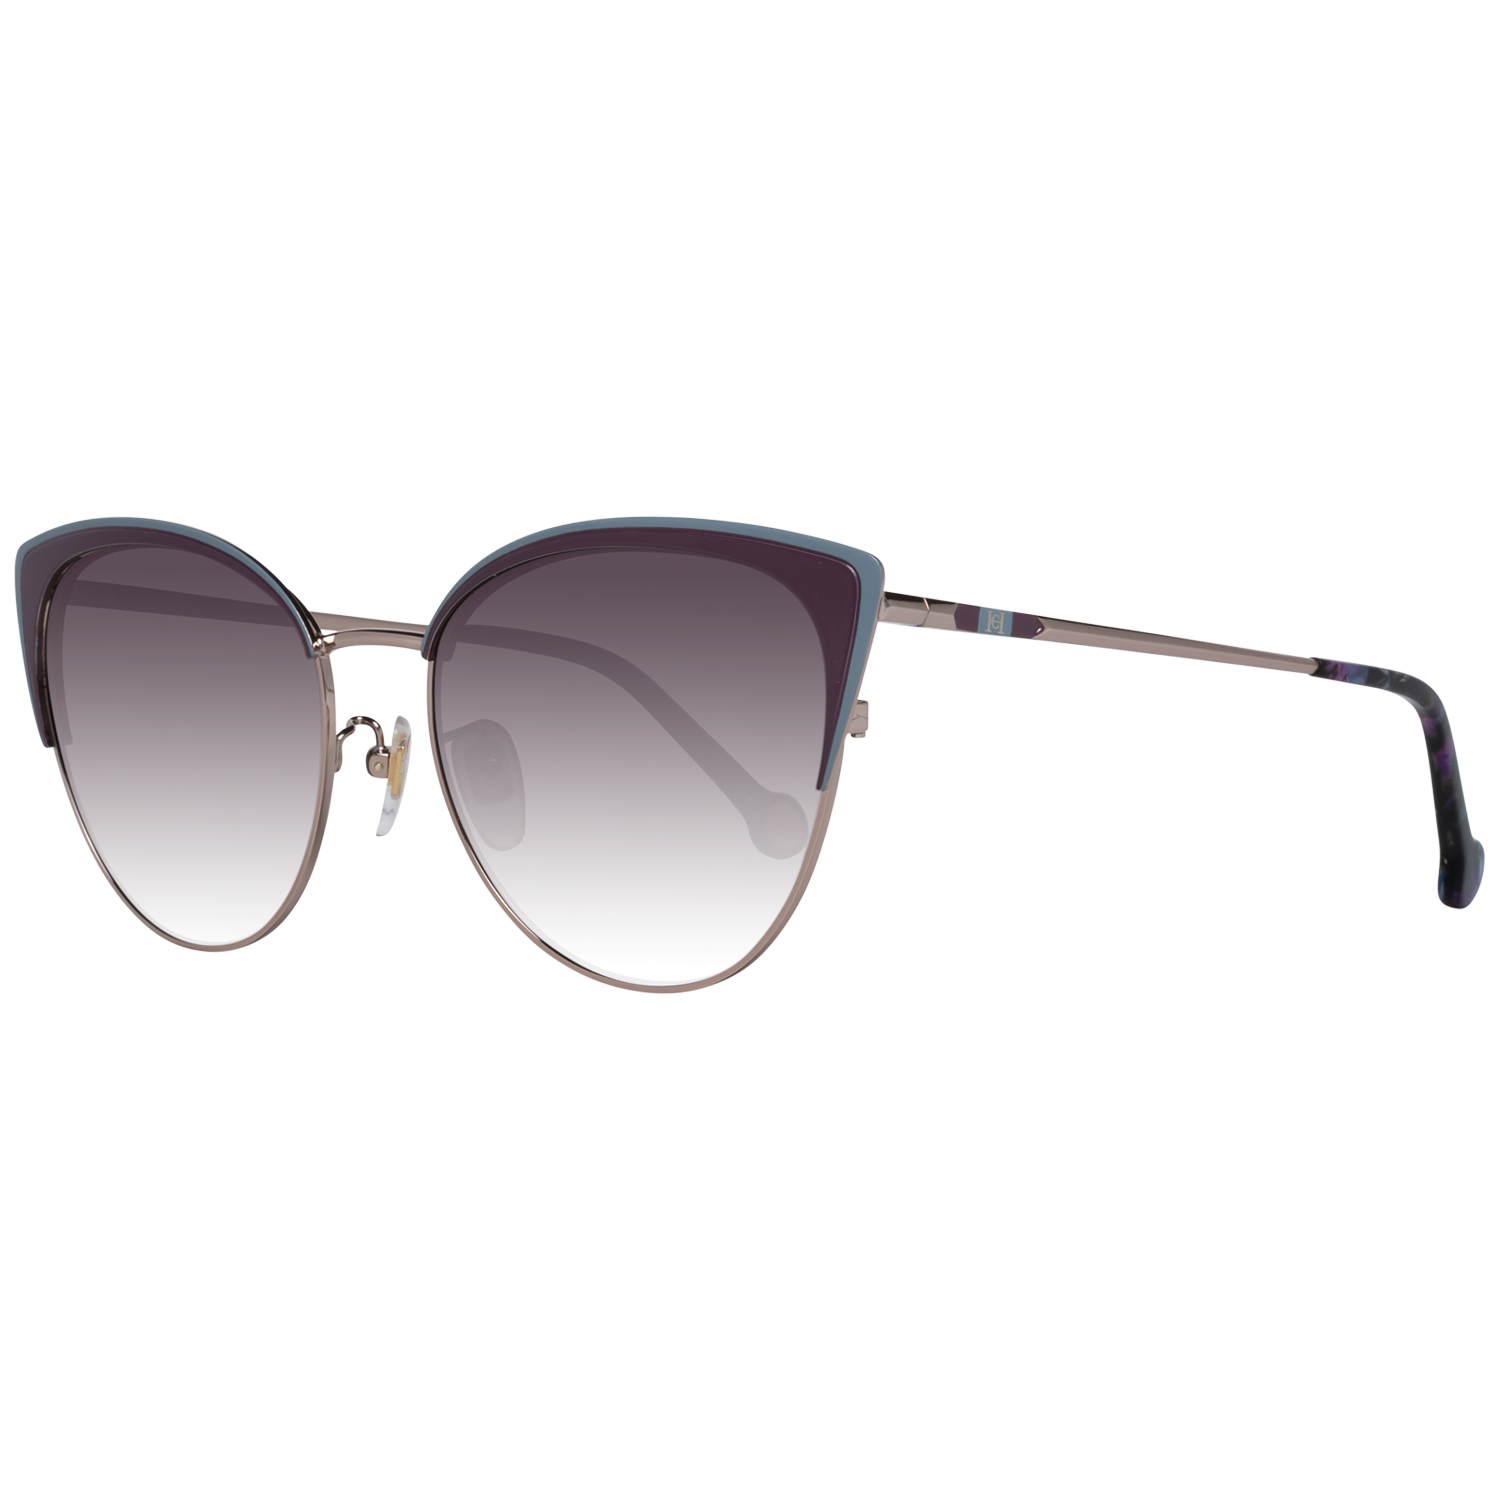 Carolina Herrera Sunglasses Carolina Herrera Sunglasses SHE177 H60 55 Eyeglasses Eyewear UK USA Australia 